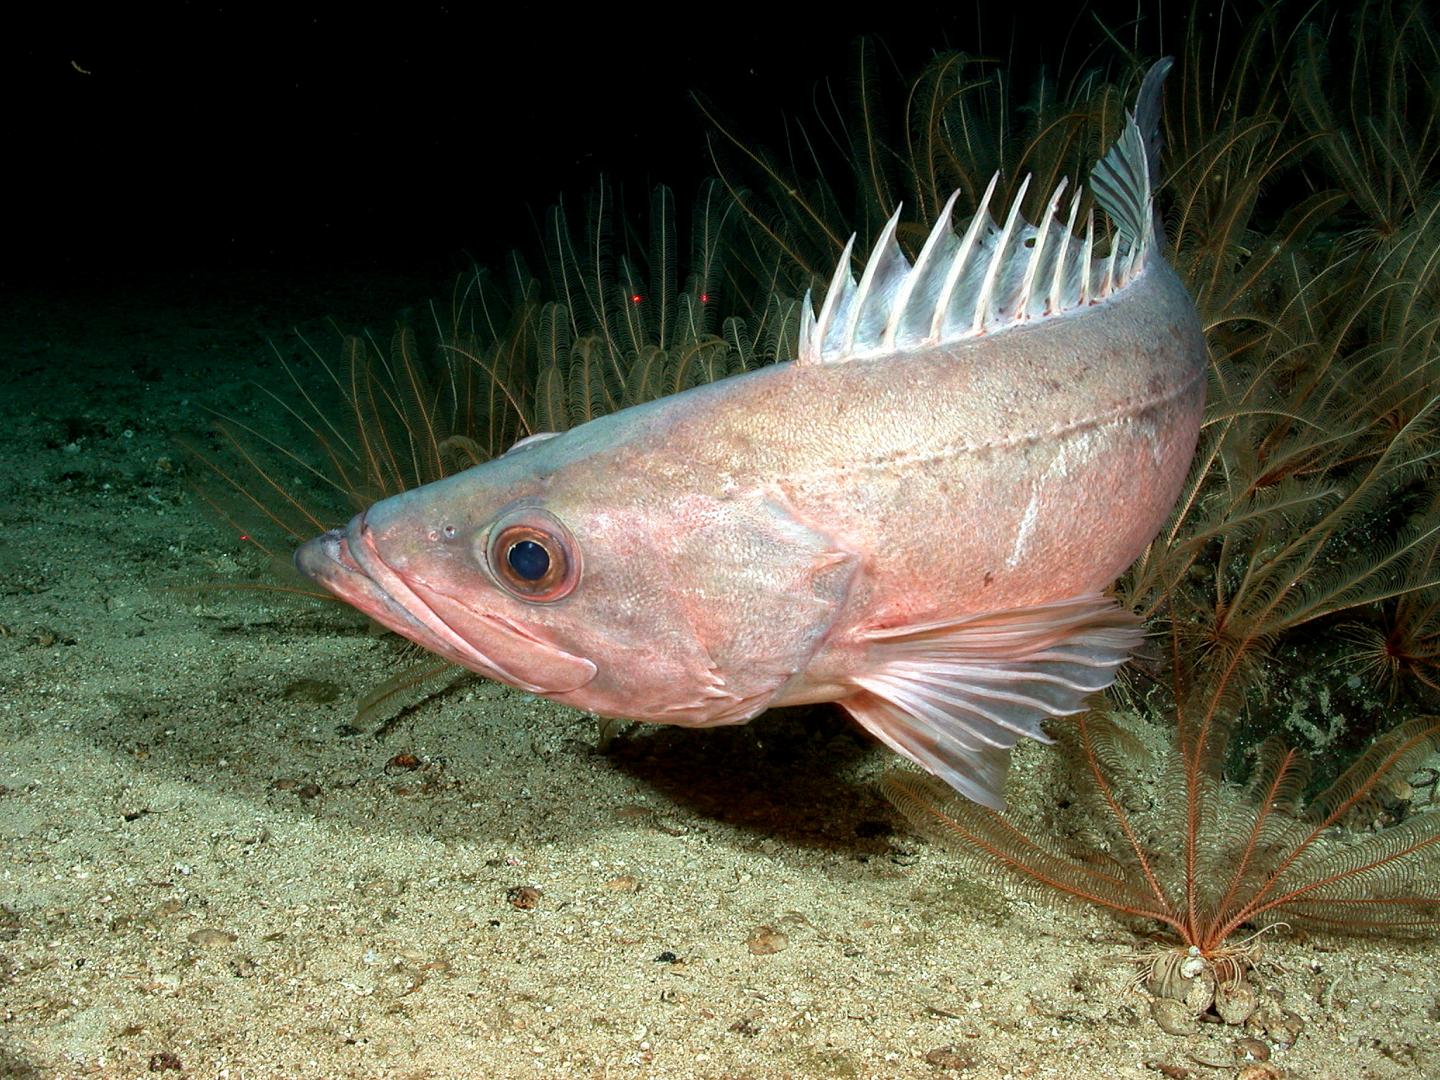 Bocaccio Rockfish